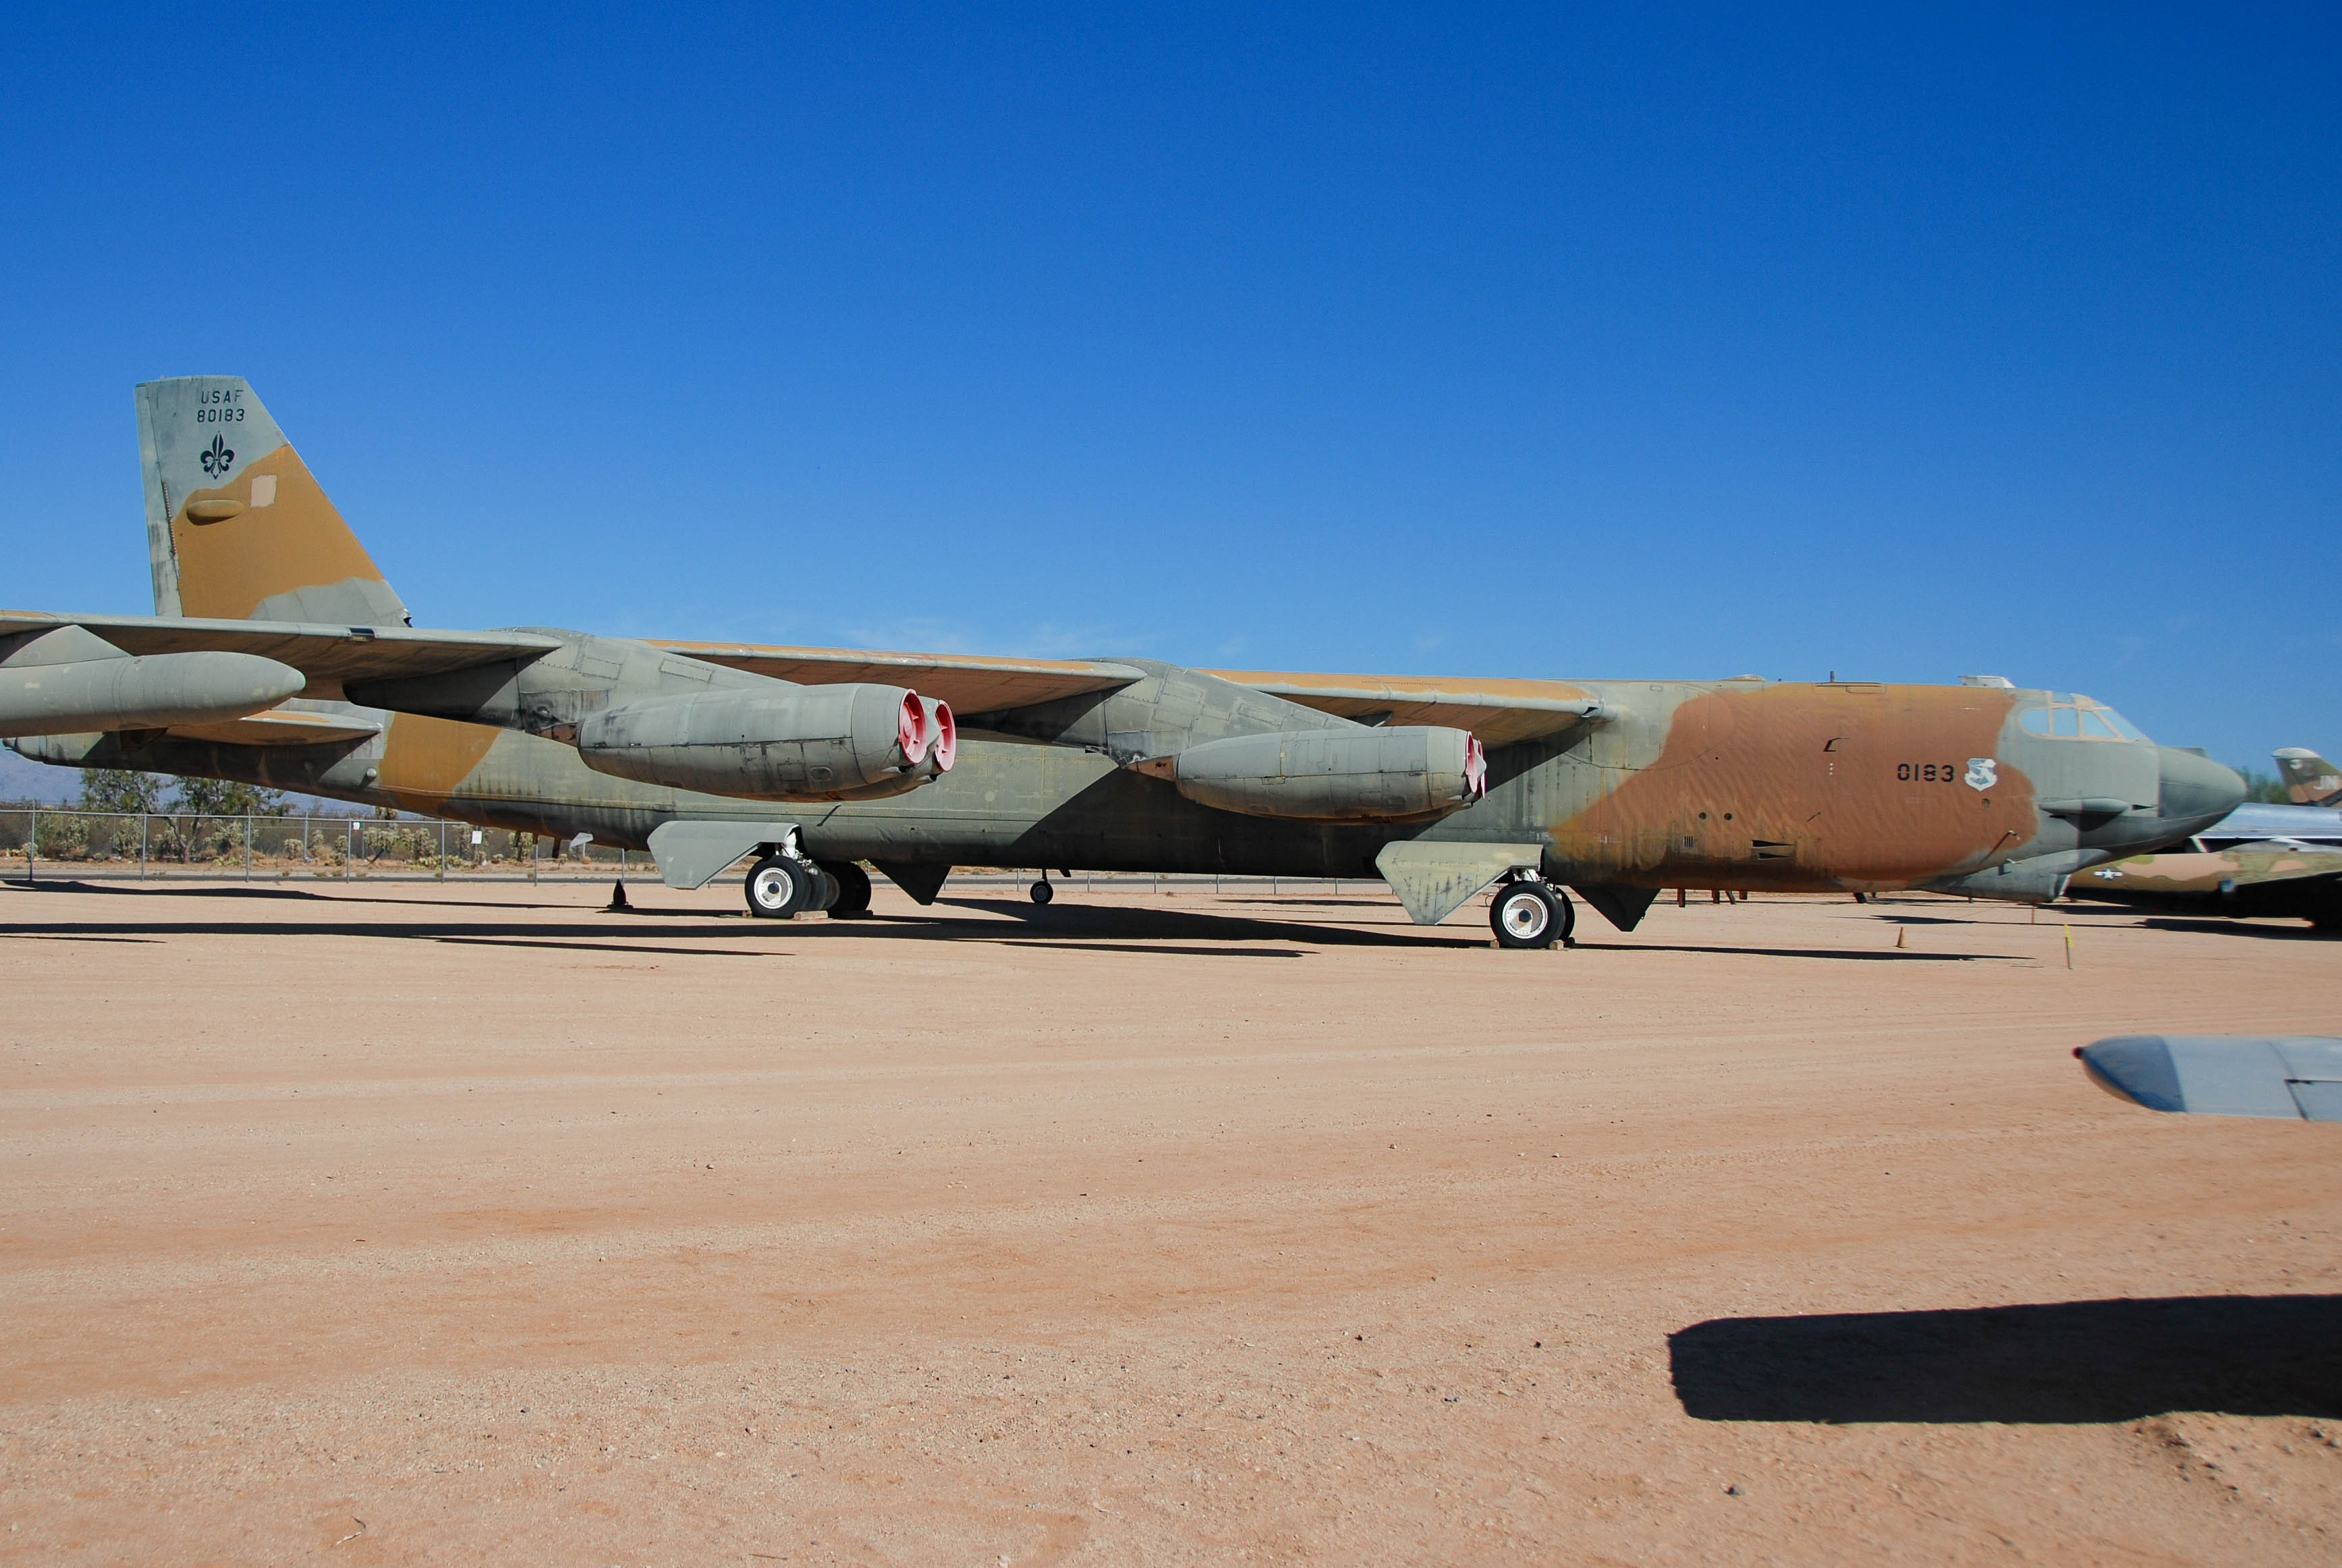 58-0183/580183 Preserved Boeing B-52 Stratofortress Airframe Information - AVSpotters.com